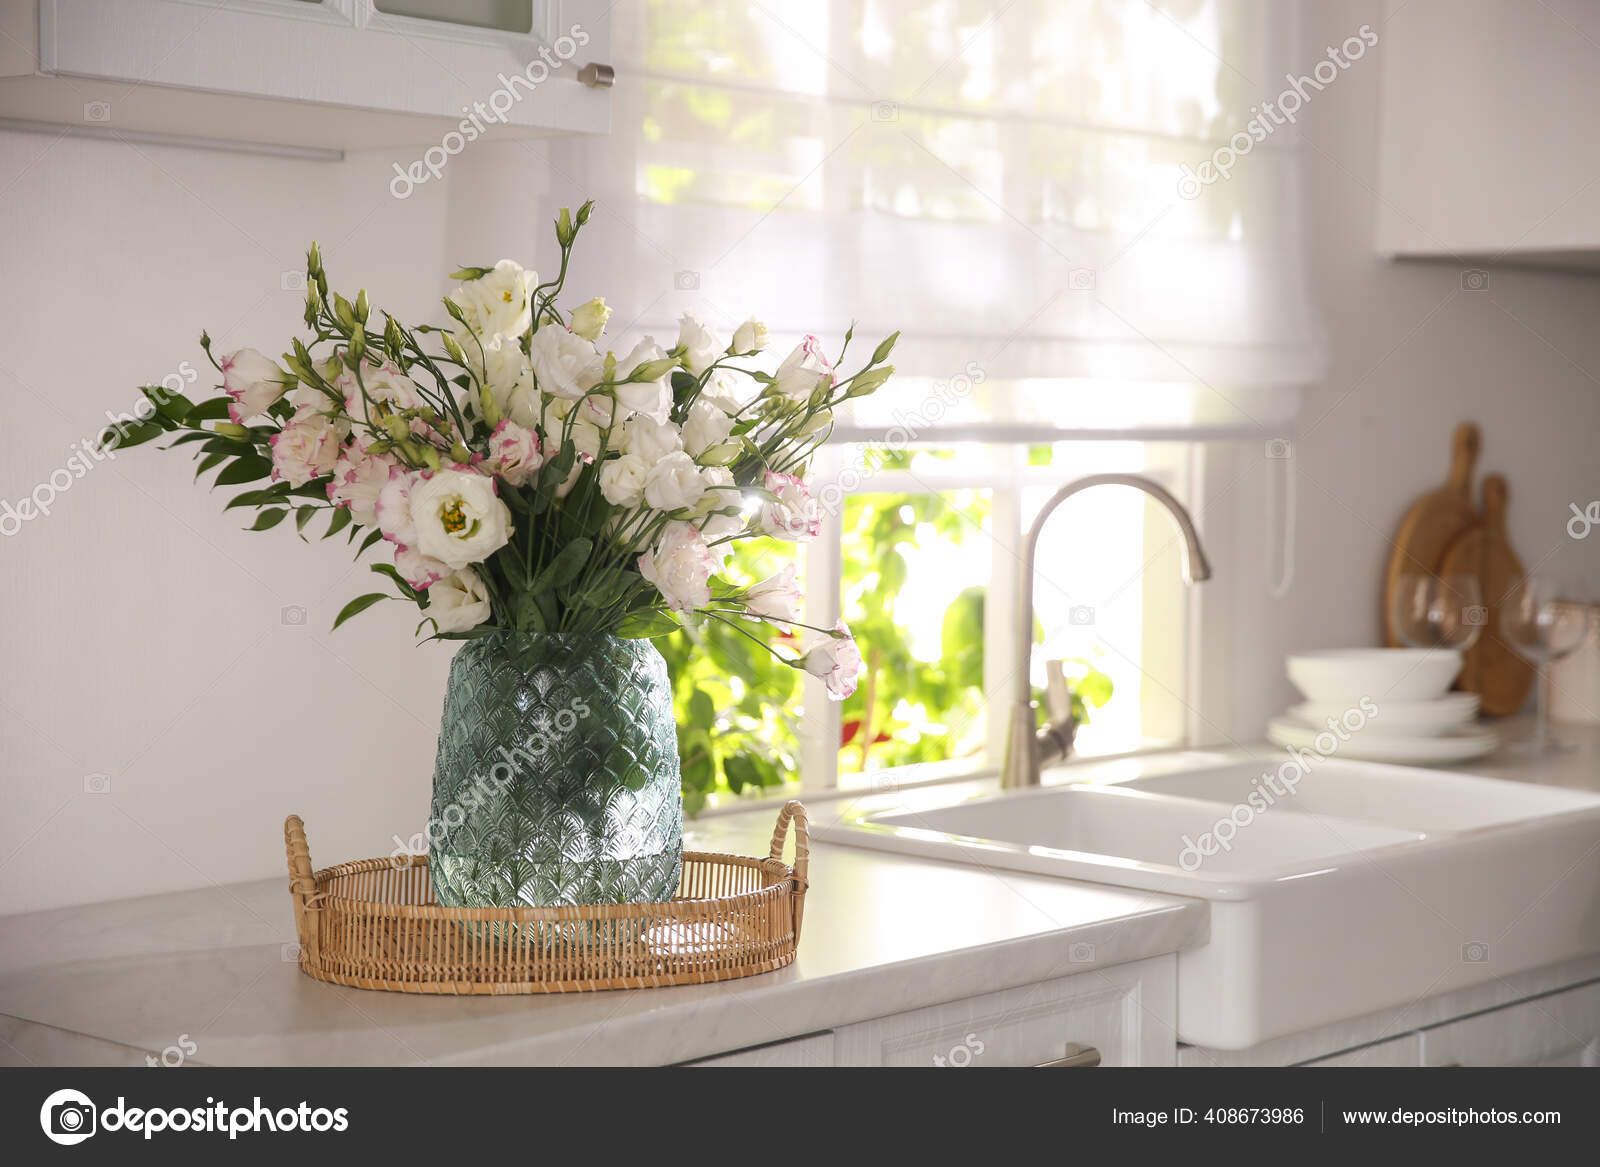 https://st4.depositphotos.com/16122460/40867/i/1600/depositphotos_408673986-stock-photo-bouquet-beautiful-flowers-countertop-kitchen.jpg